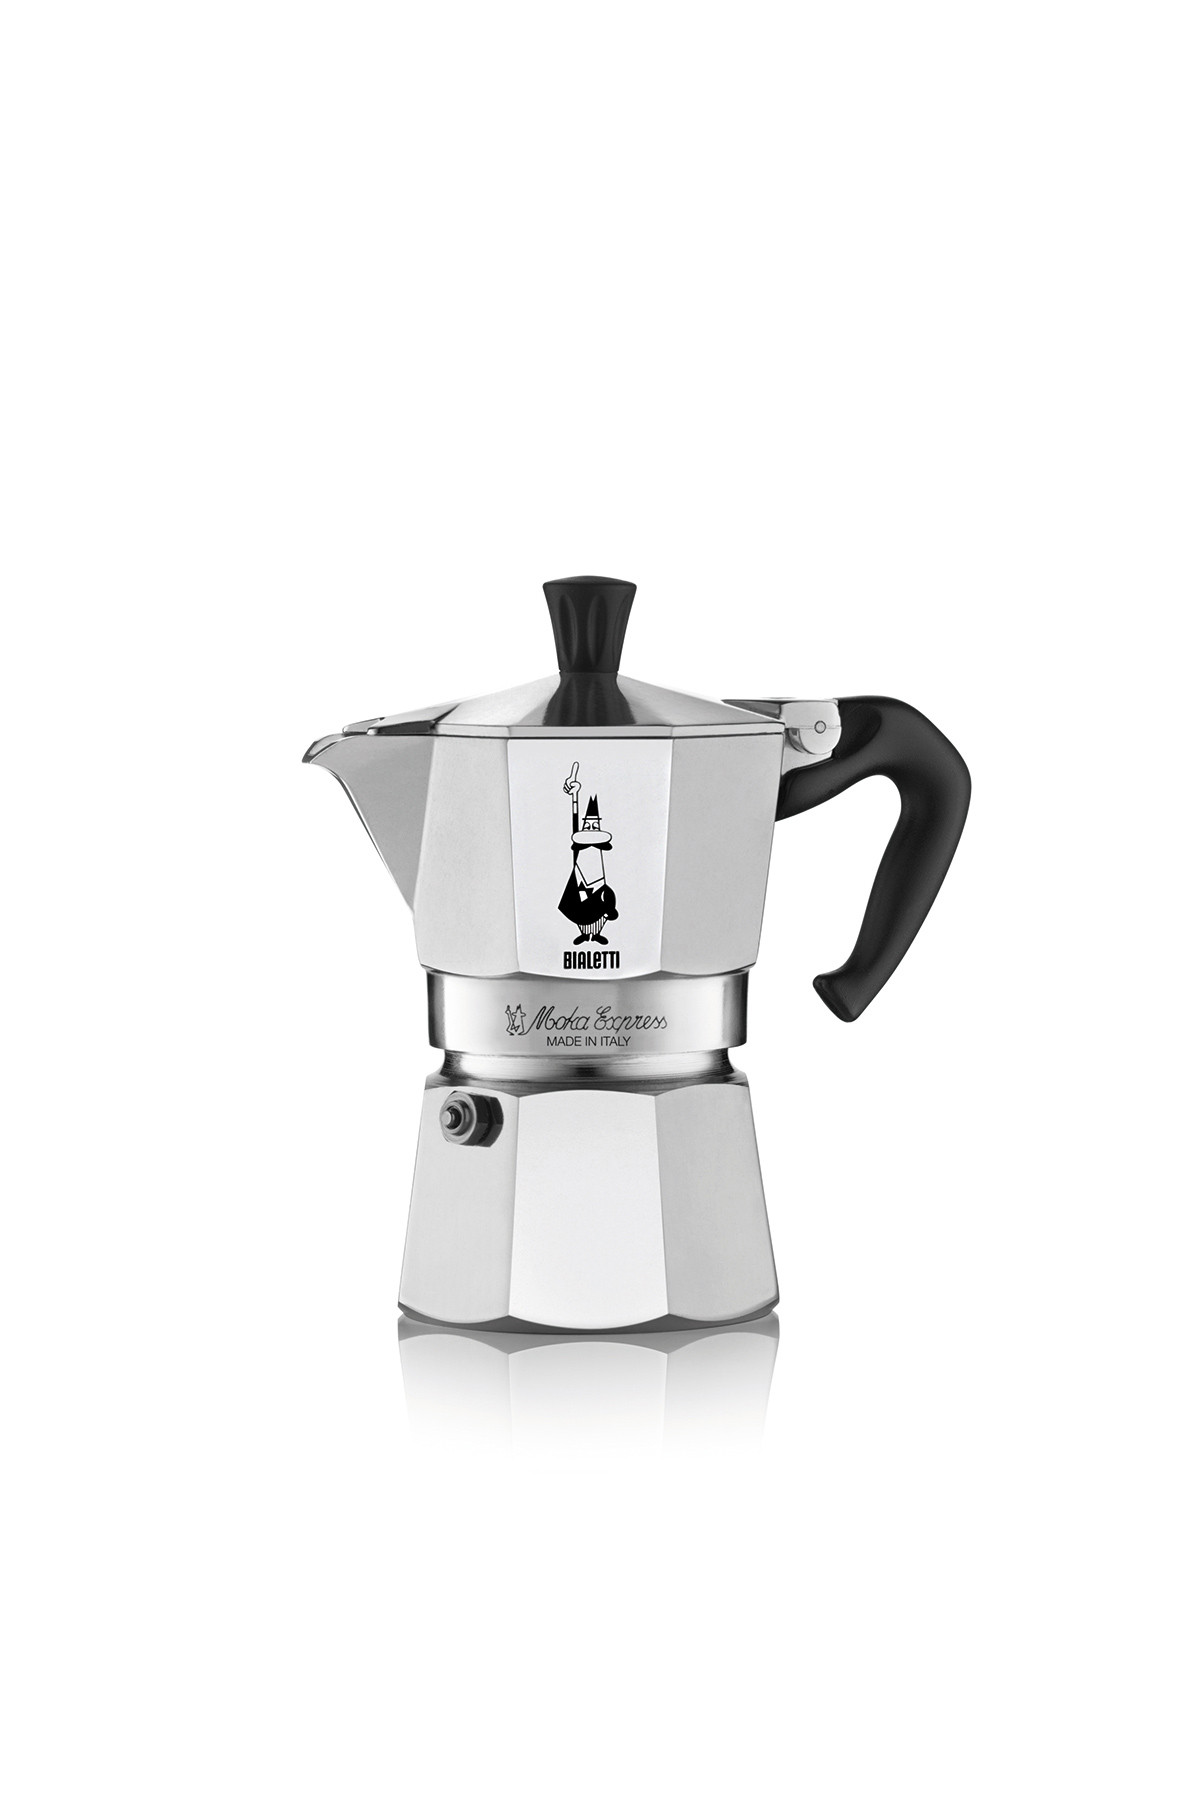 https://media.heirol.fi/587292/1200/espresso-pan-2-cups-moka-express_.jpg